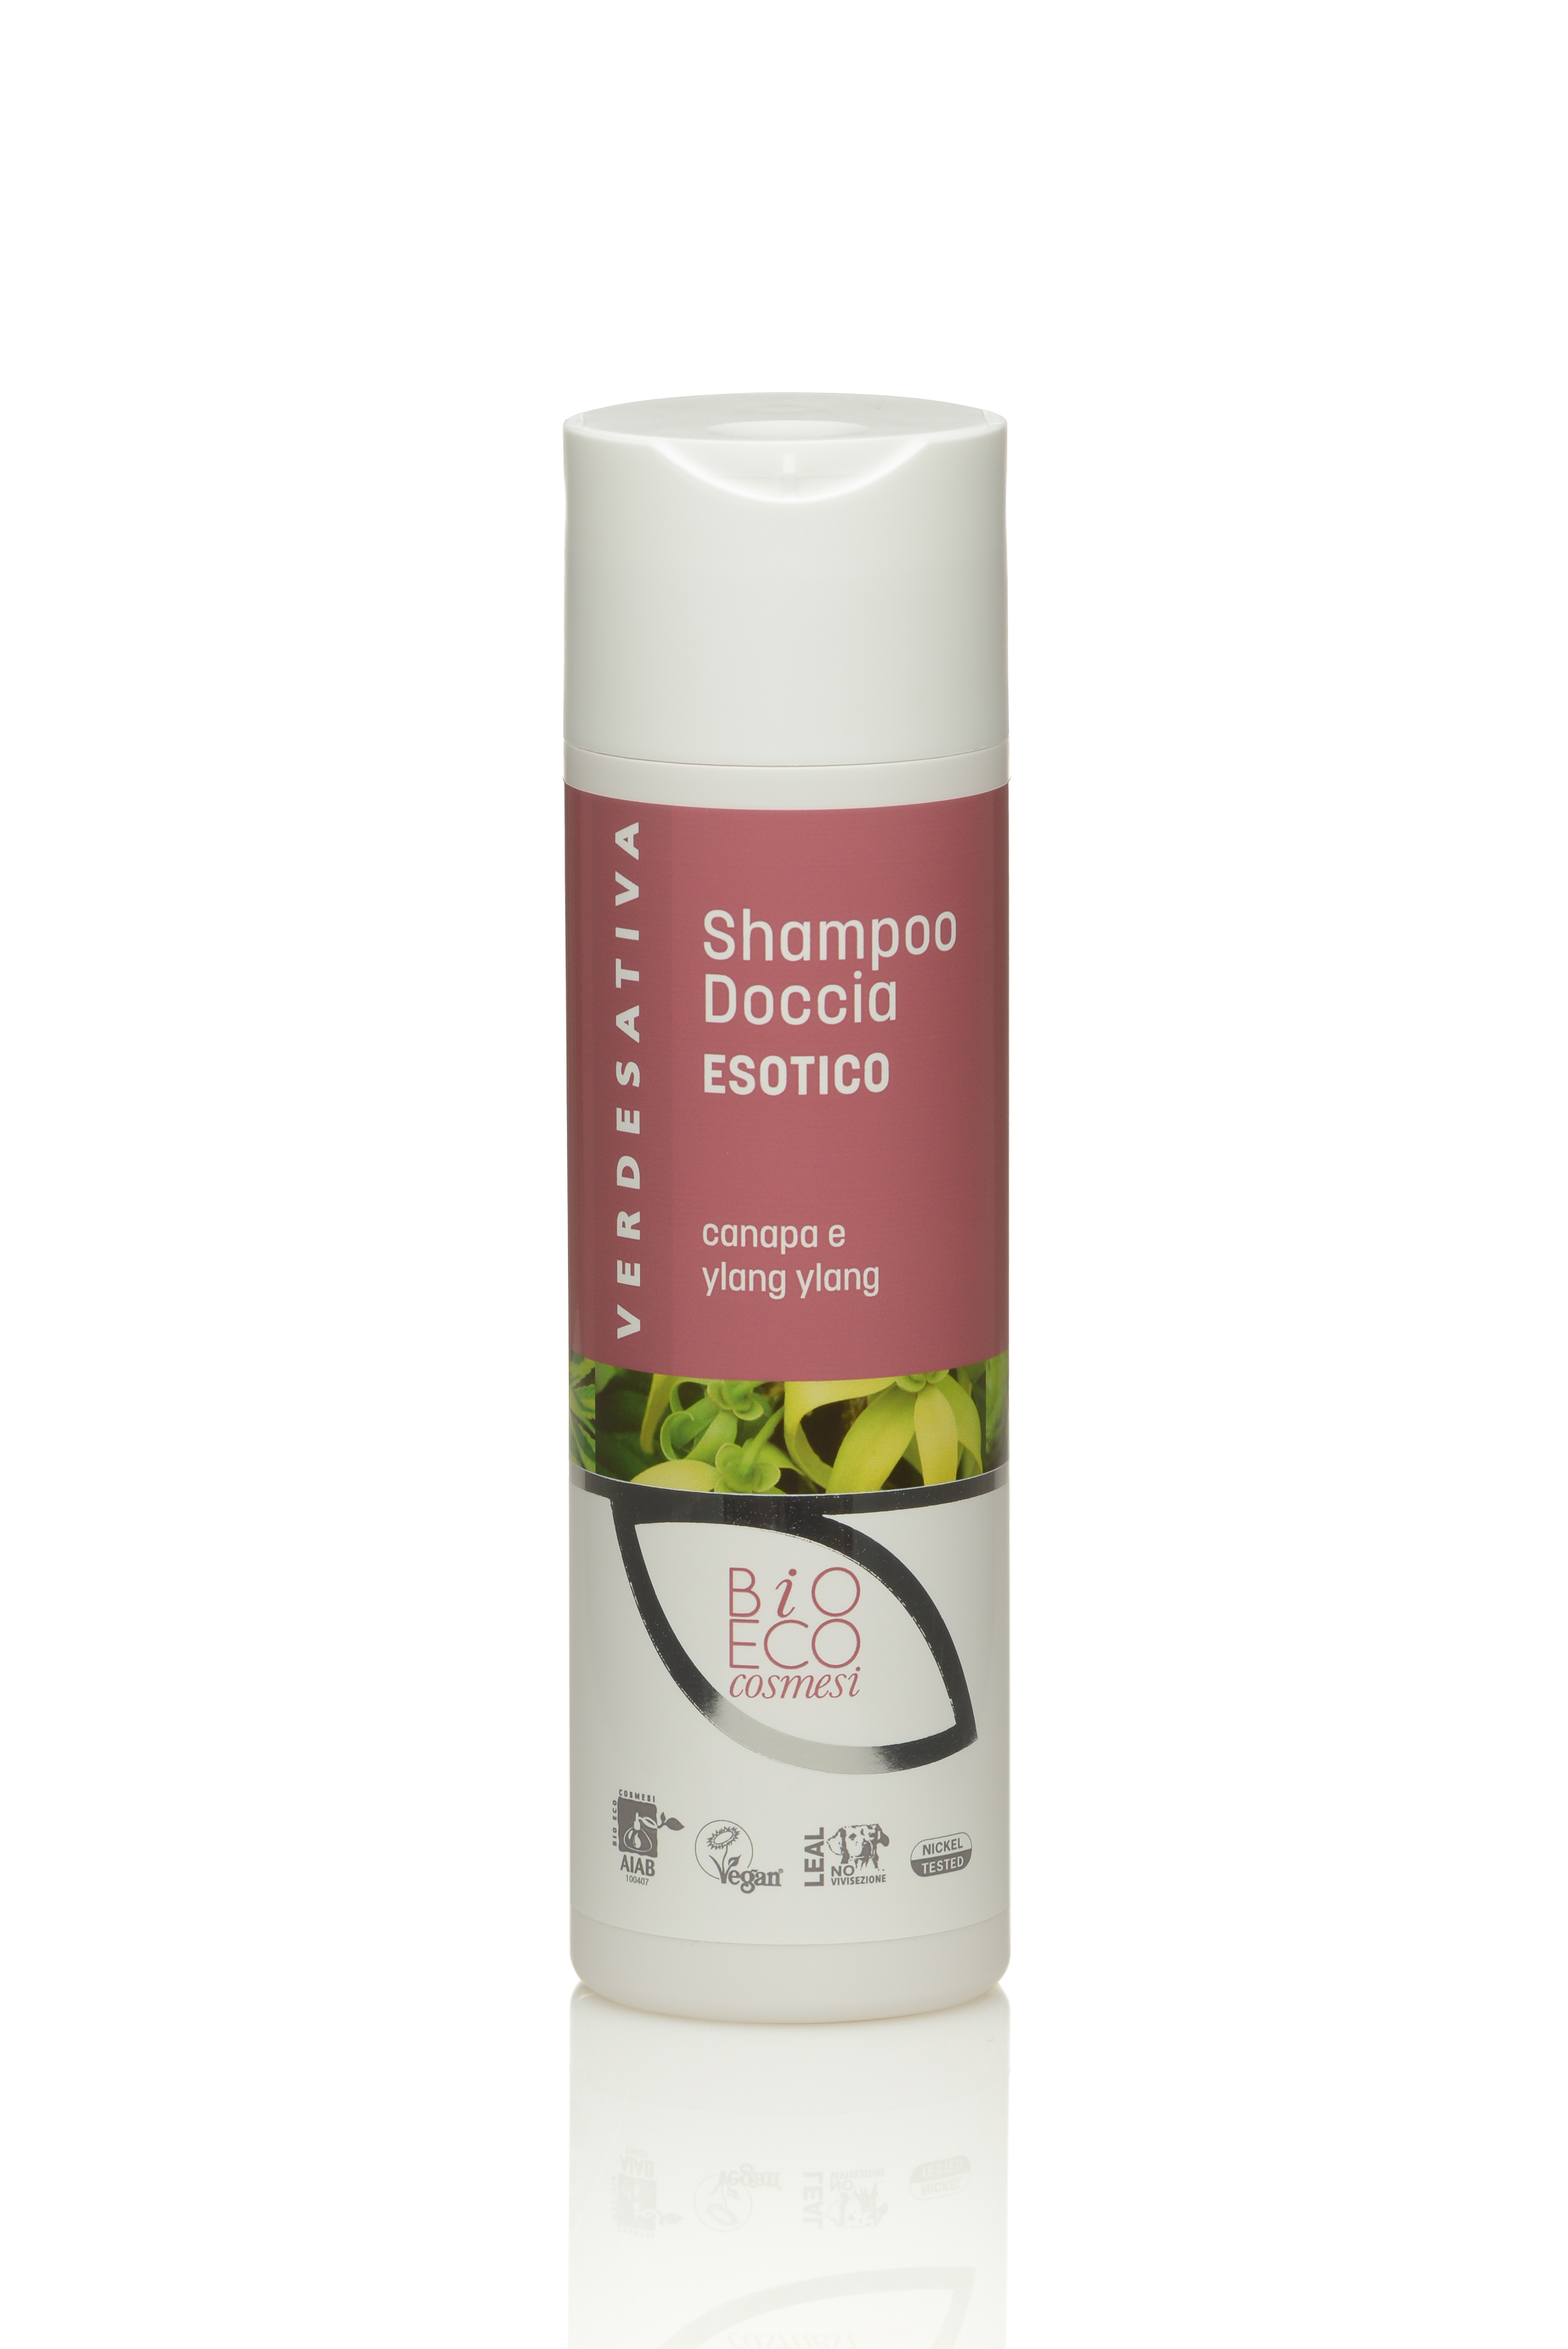 Shampoo doccia ESOTICO canapa e Ylang Ylang 100% naturale e bio degradabile 200g